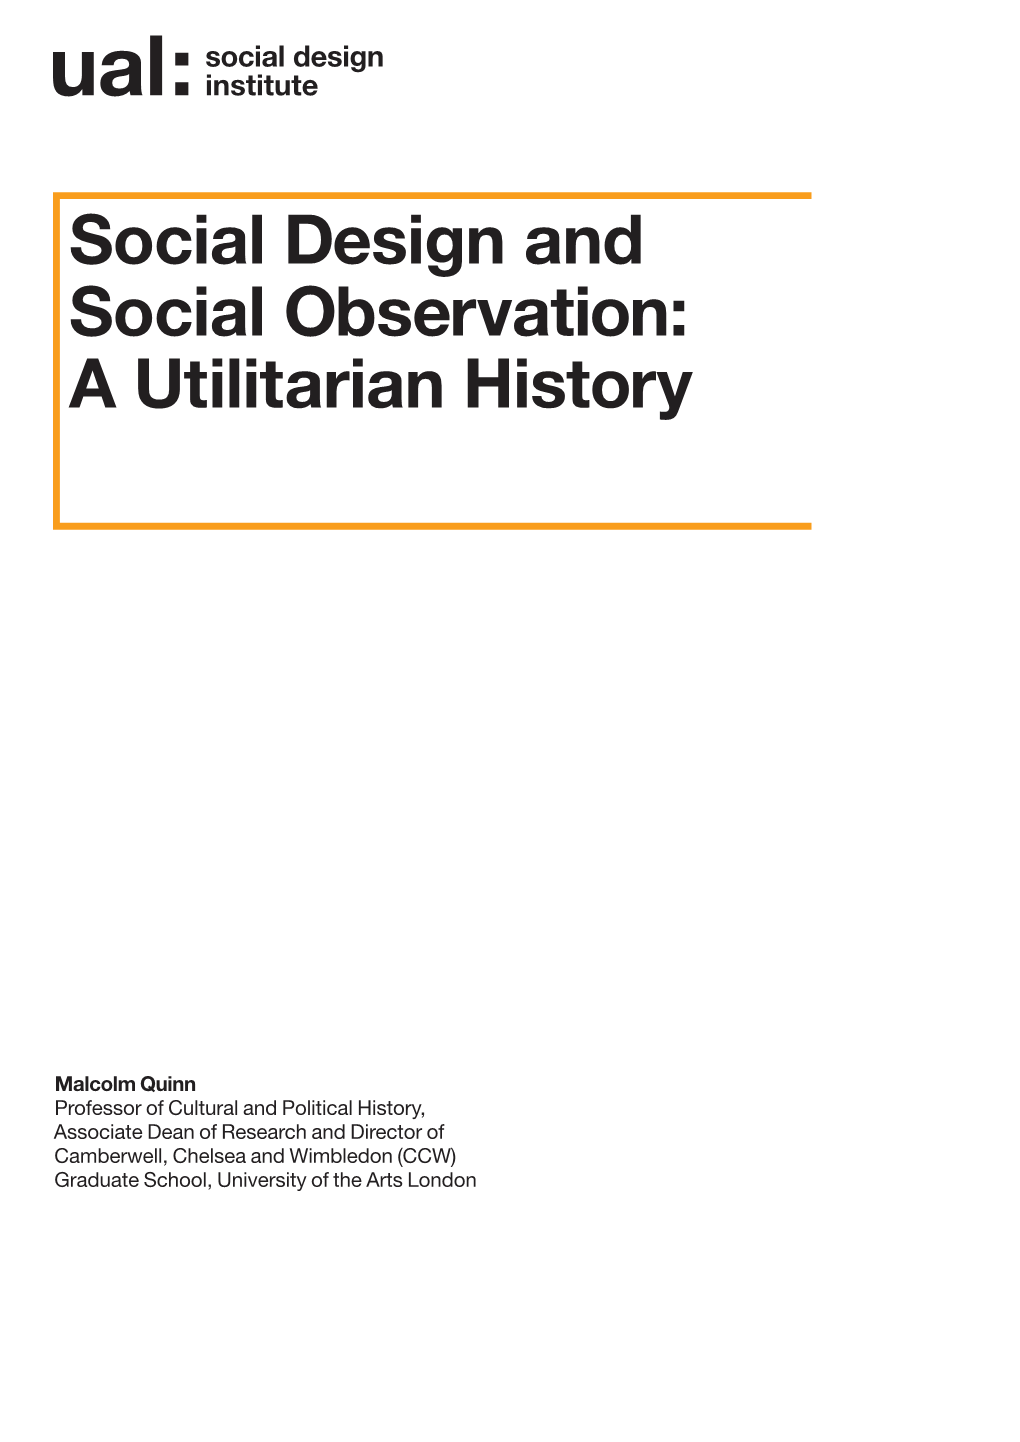 Social Design and Social Observation: a Utilitarian History